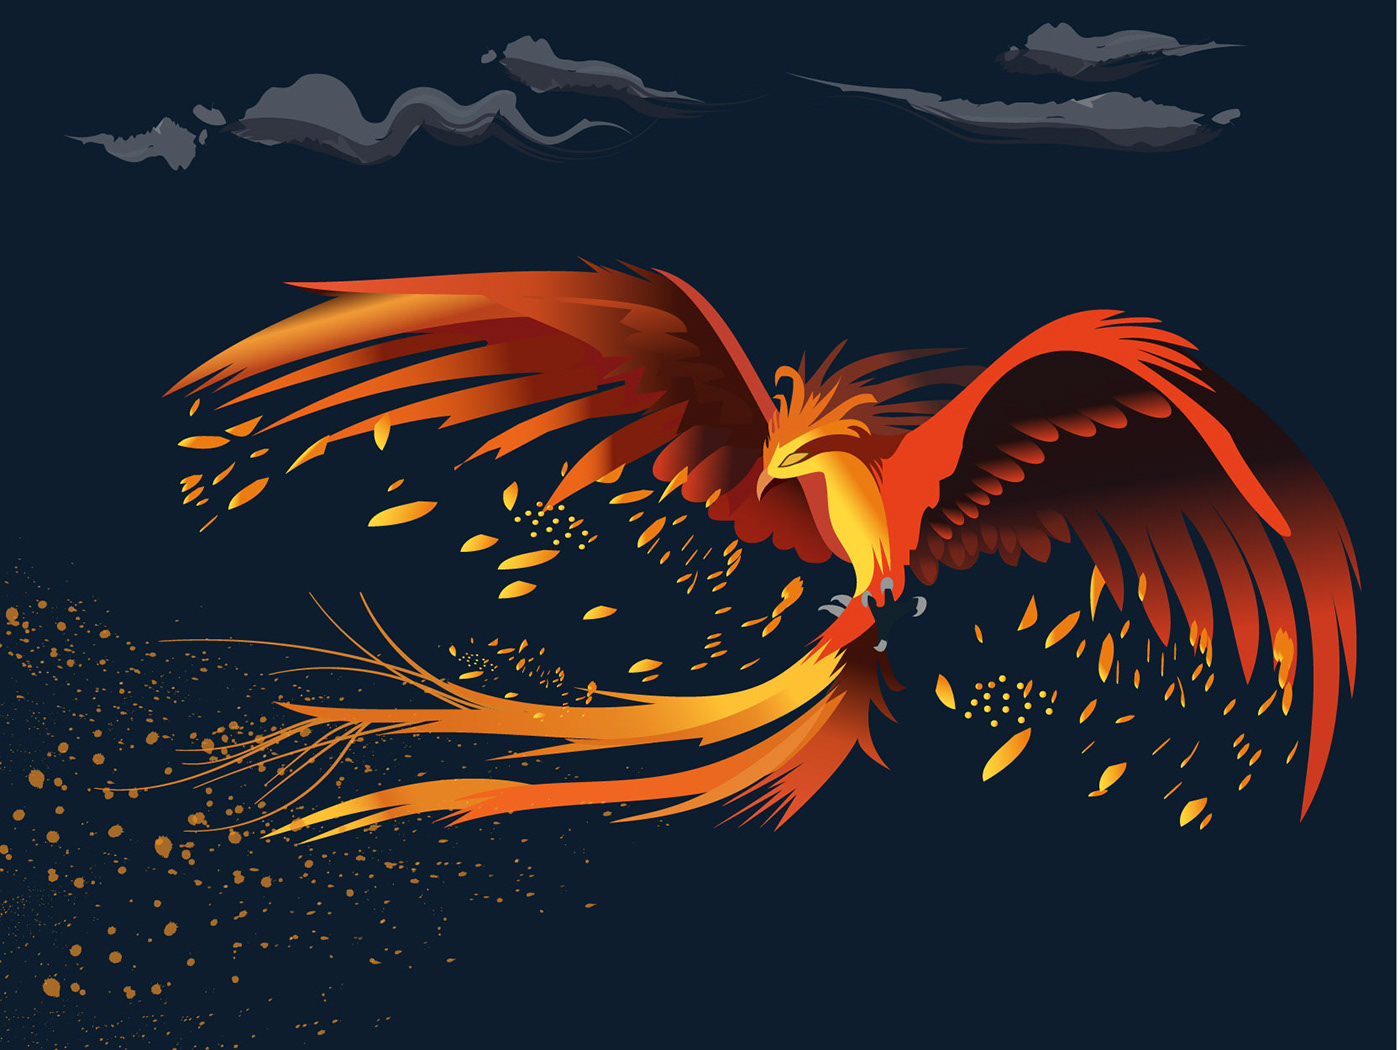 Book Cover Design books dumbledore fawkes Flames harry potter Hogwarts mockup design order of the phoenix Phoenix